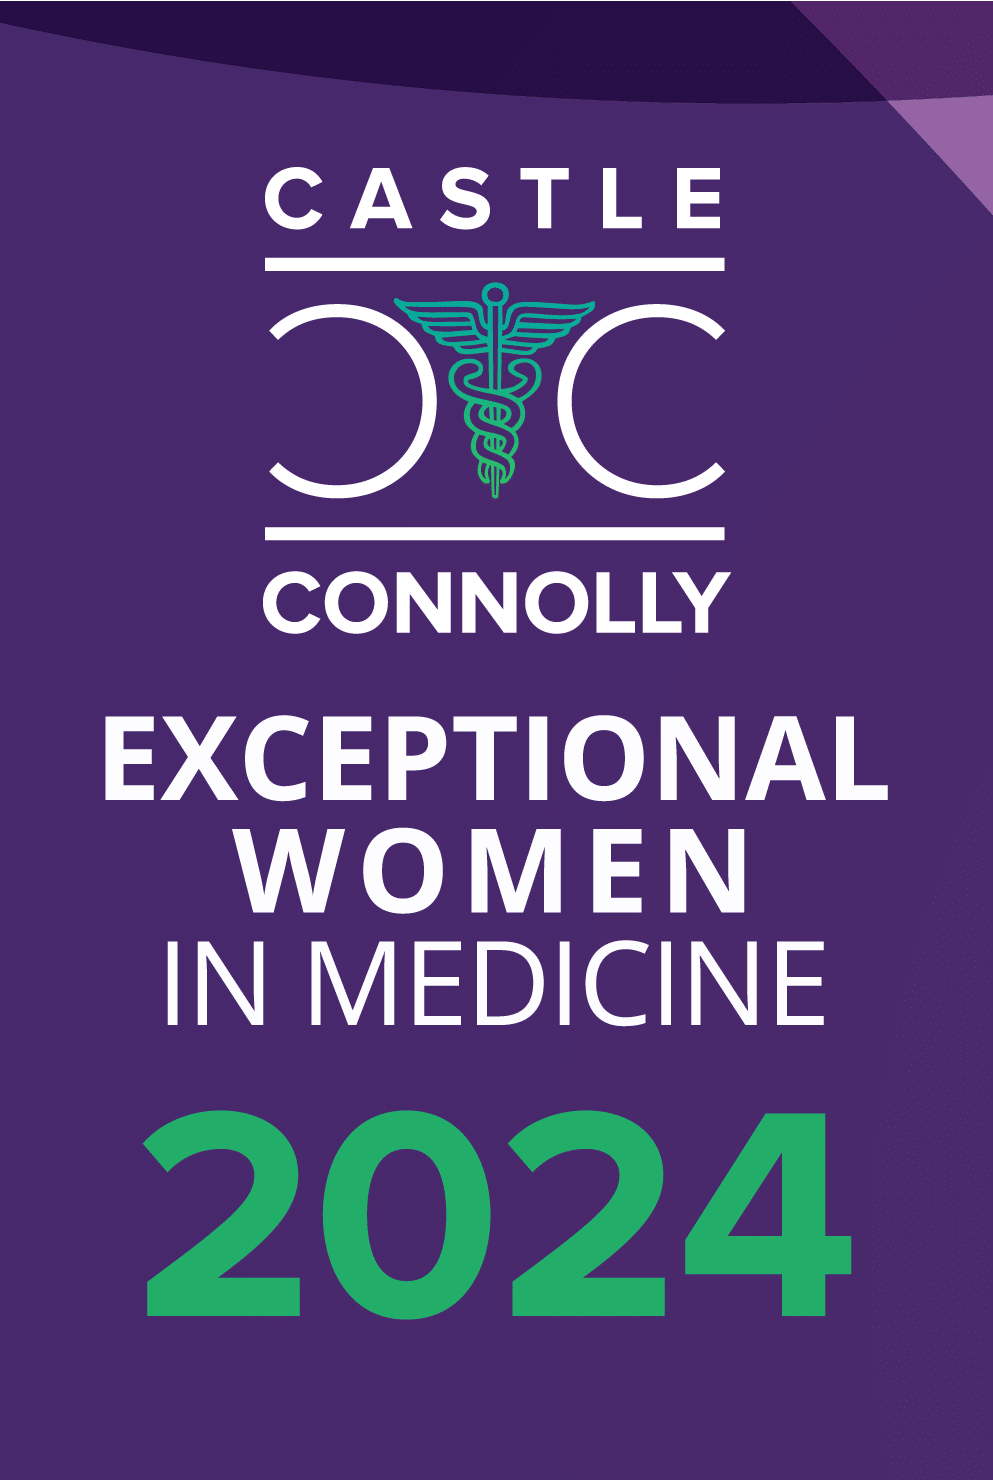 CC Exceptional Women in Medicine Logo 2024 2